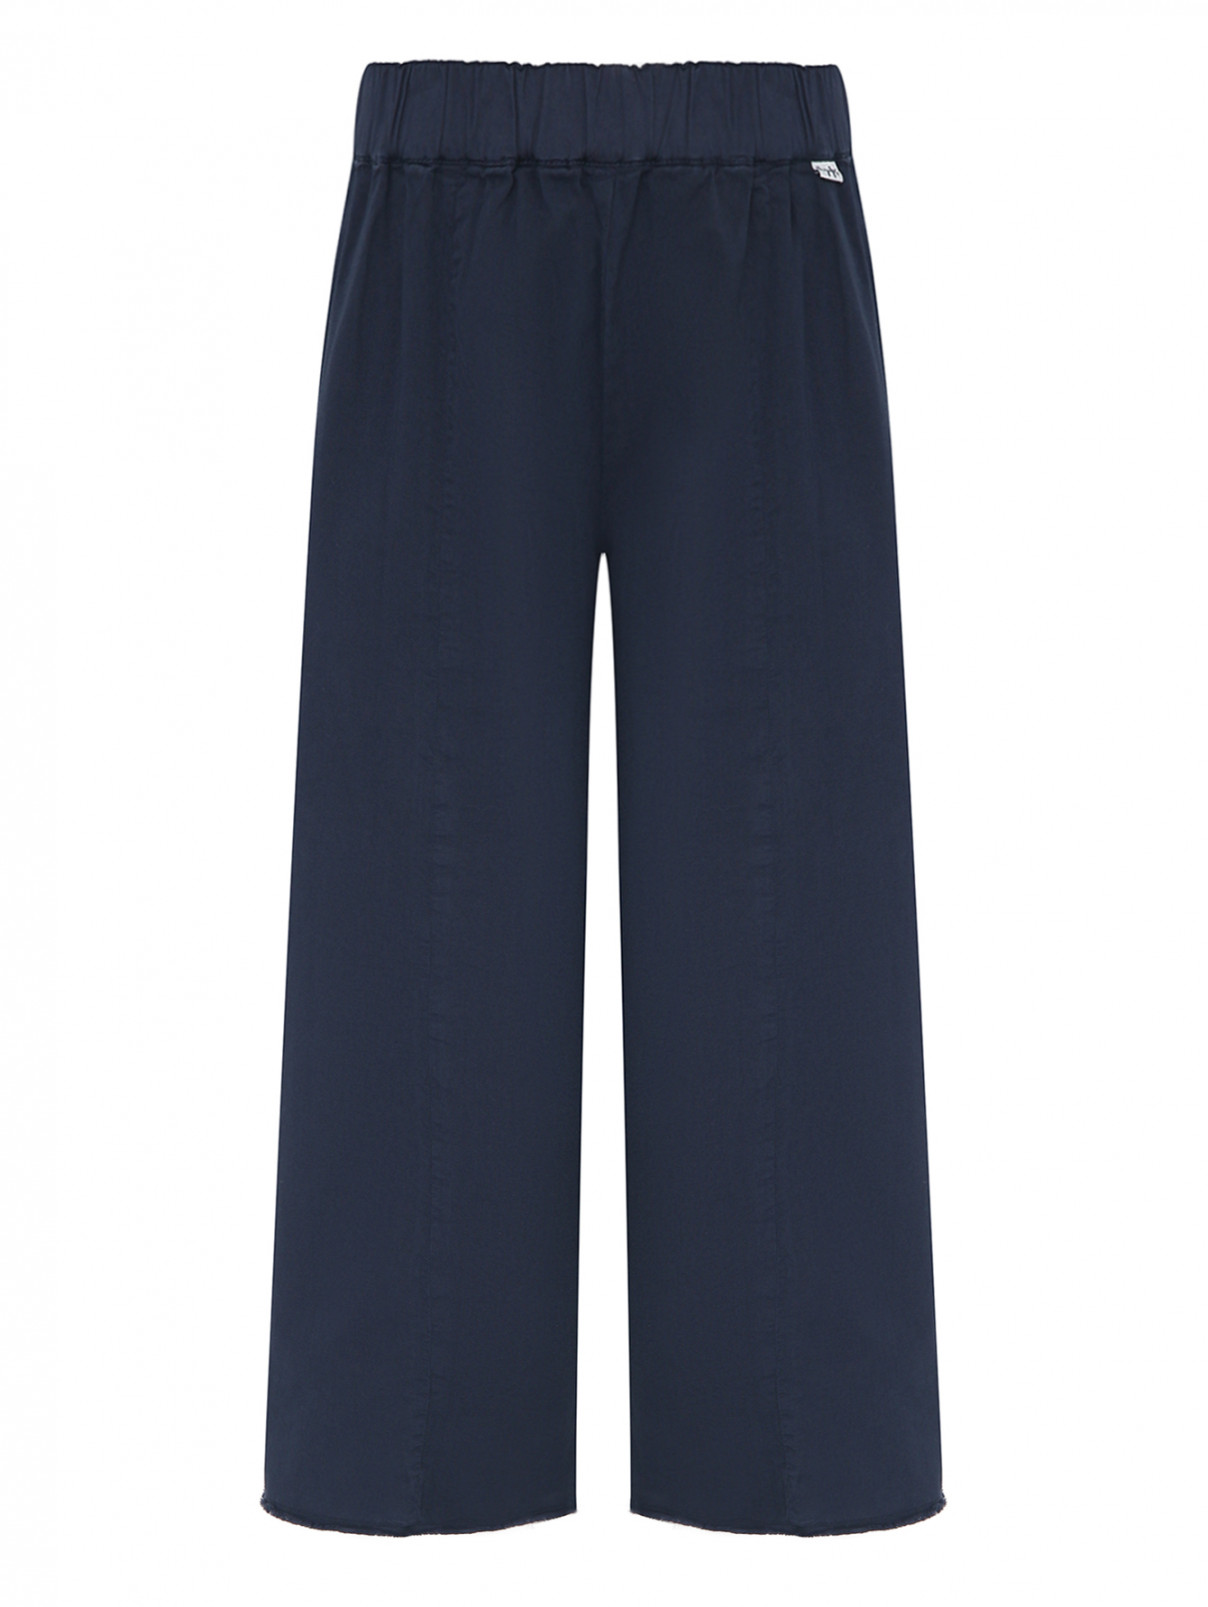 Однотонные брюки на резинке Il Gufo  –  Общий вид  – Цвет:  Синий